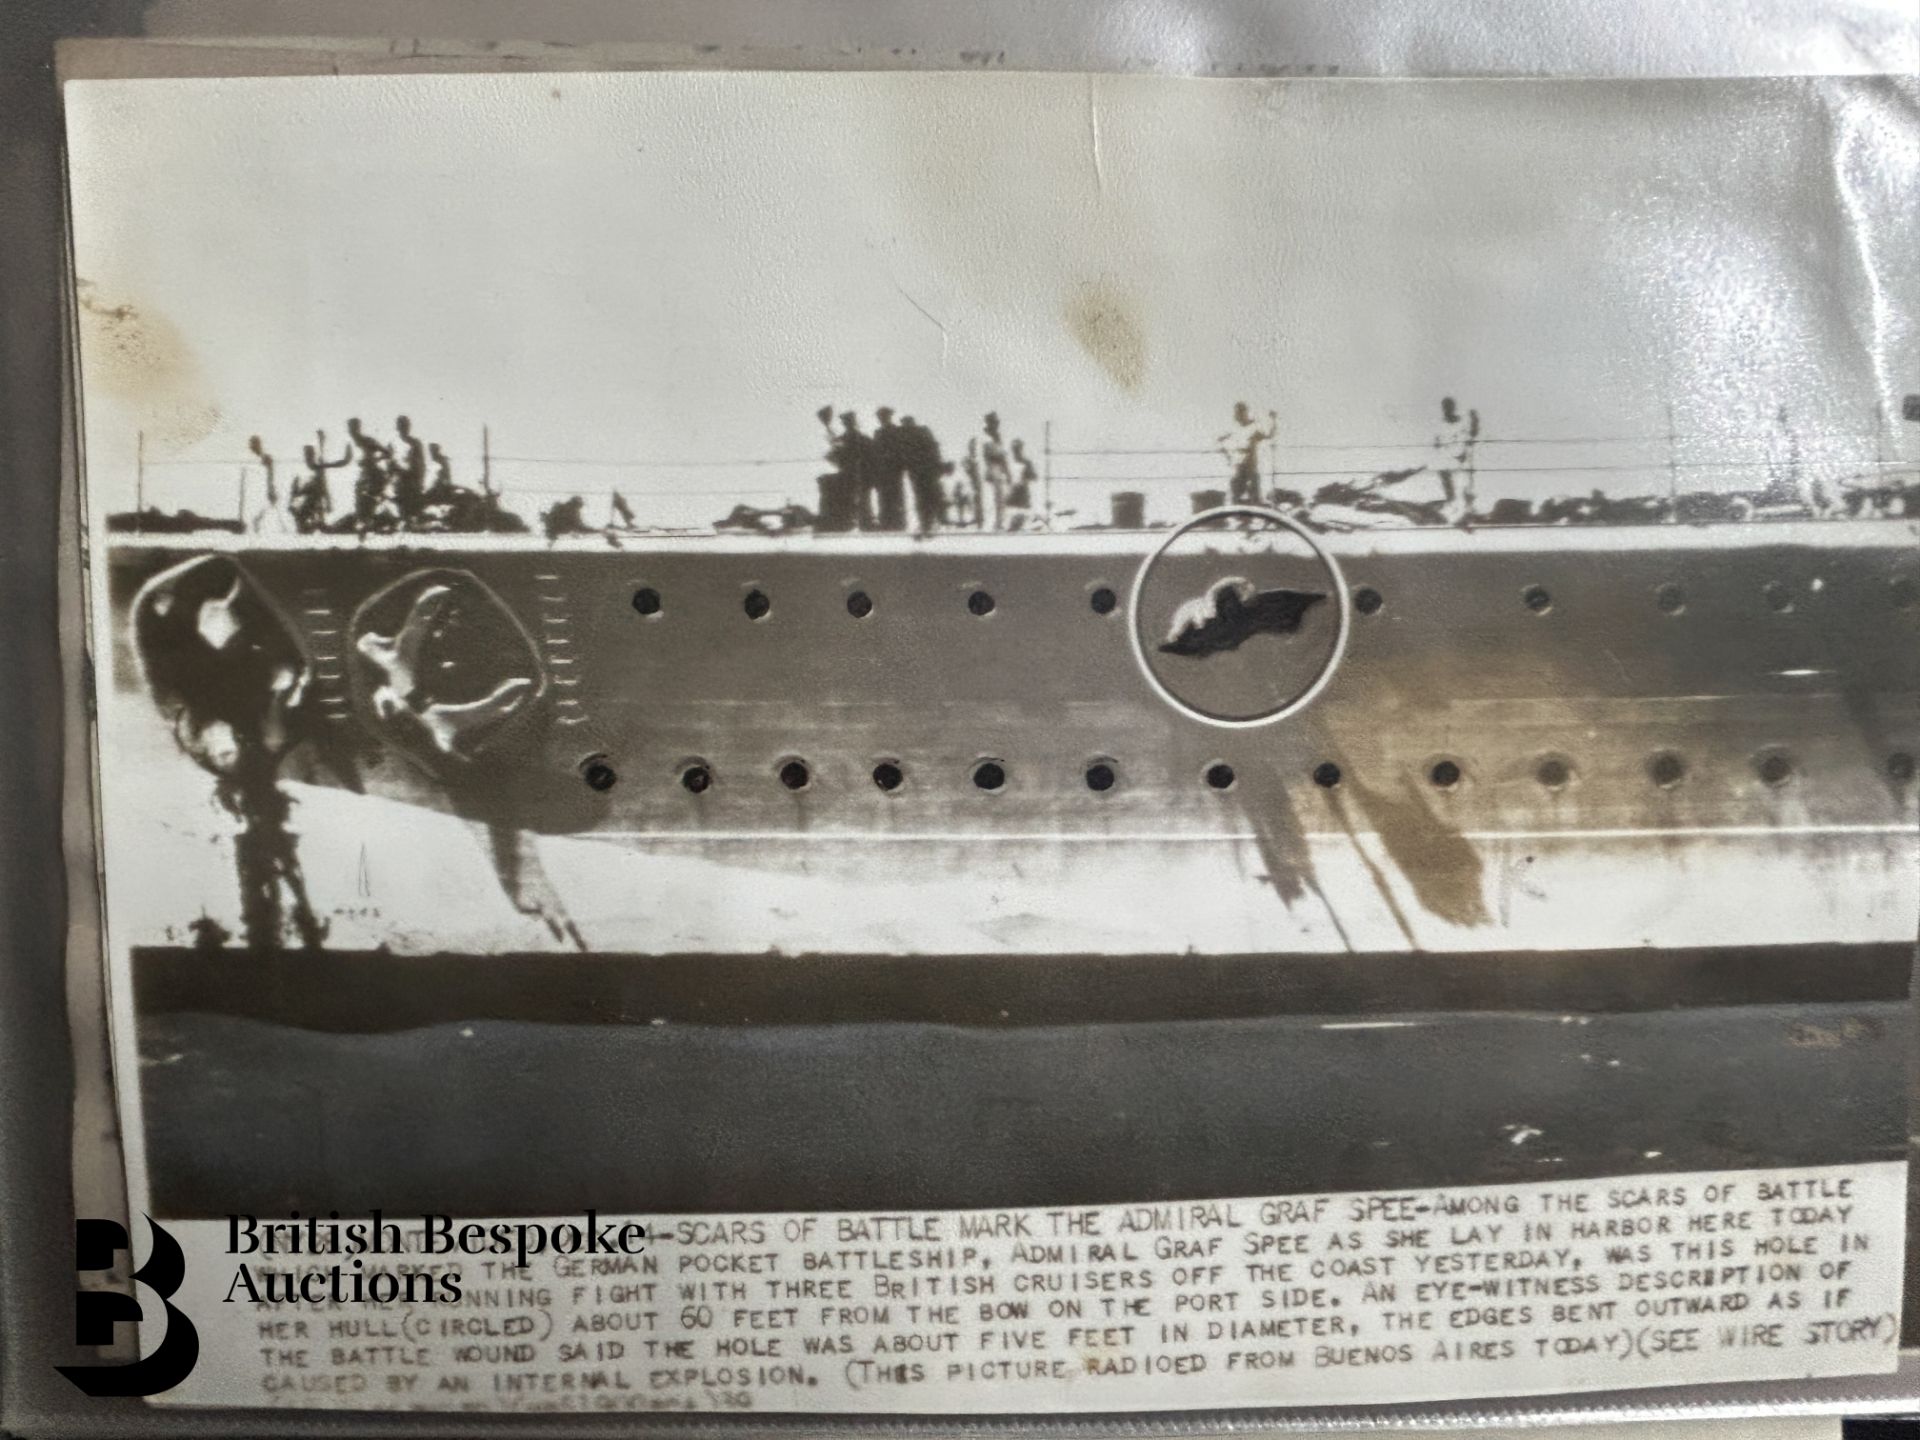 Graf Spee (Pocket Battleship) Interest, incl. Photographs, Documents, Miscellanea - Image 113 of 126